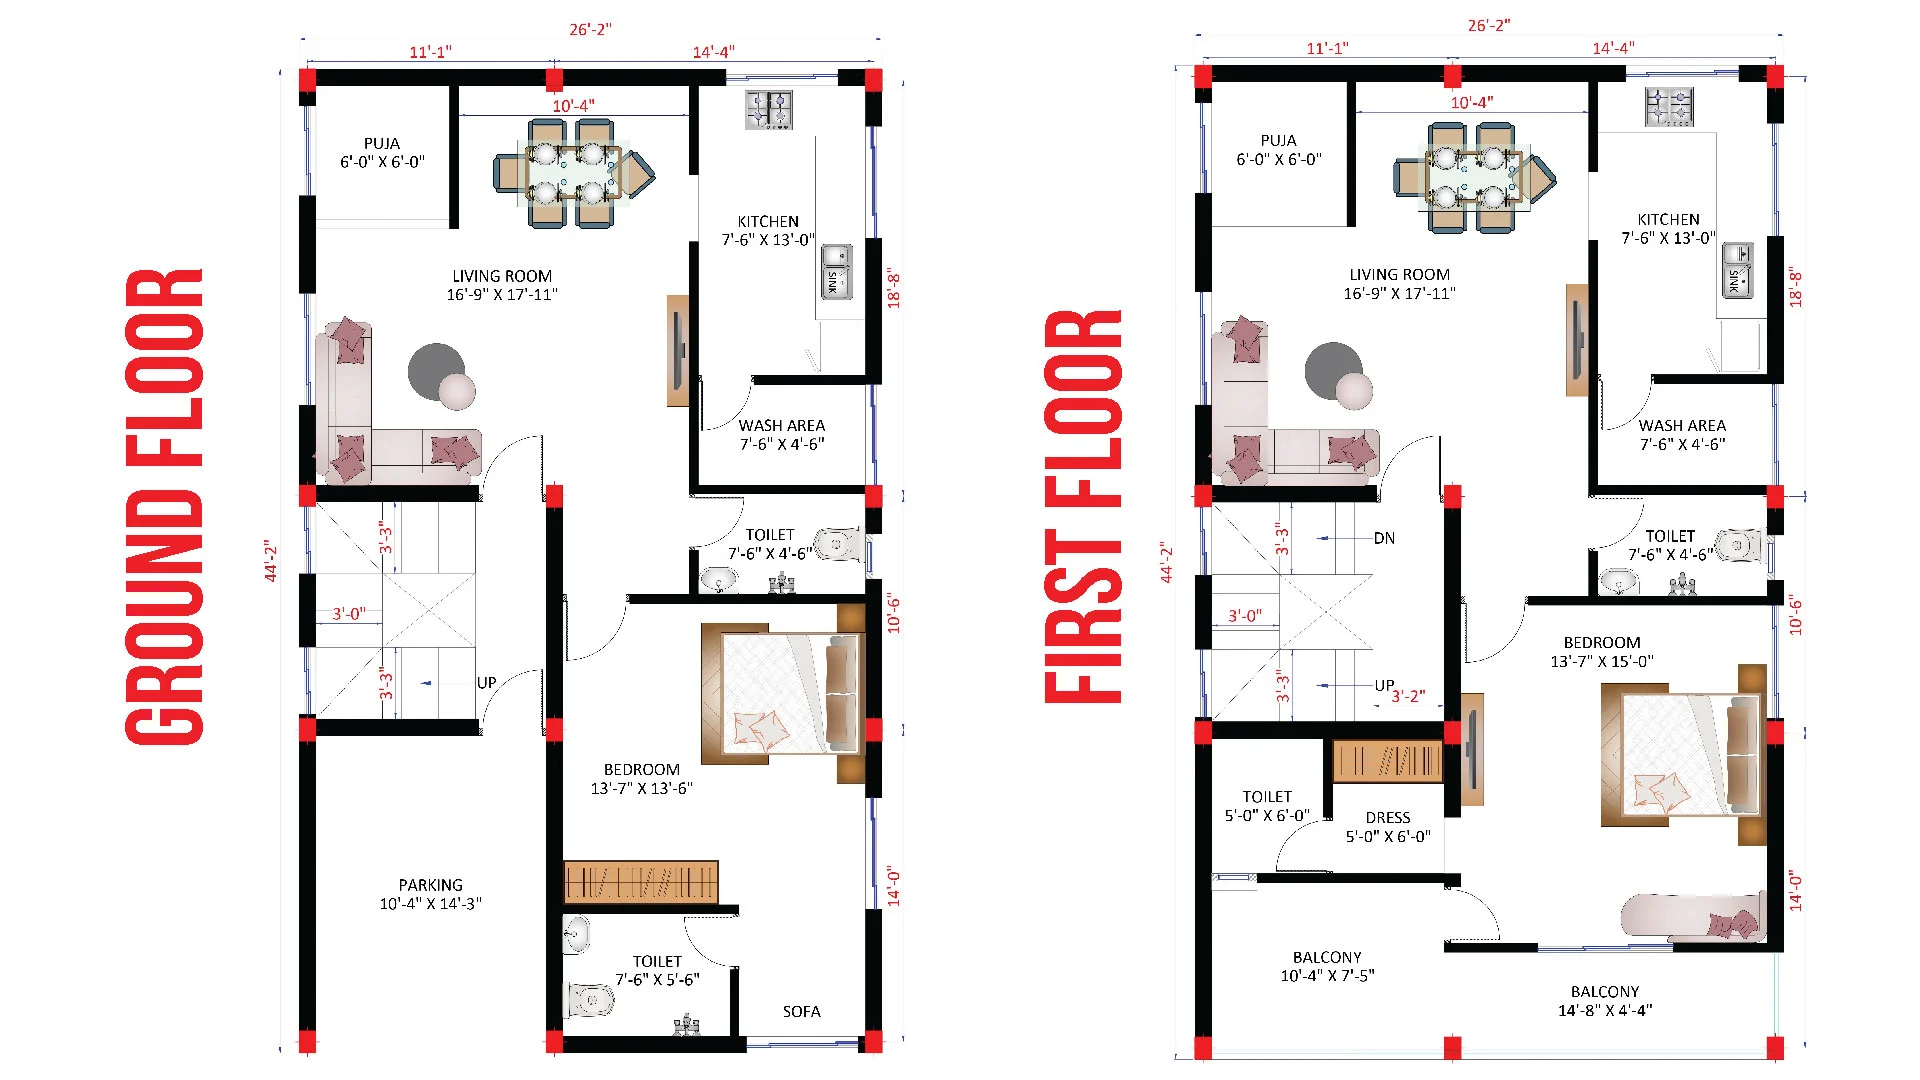 duplex 44x26 house plan